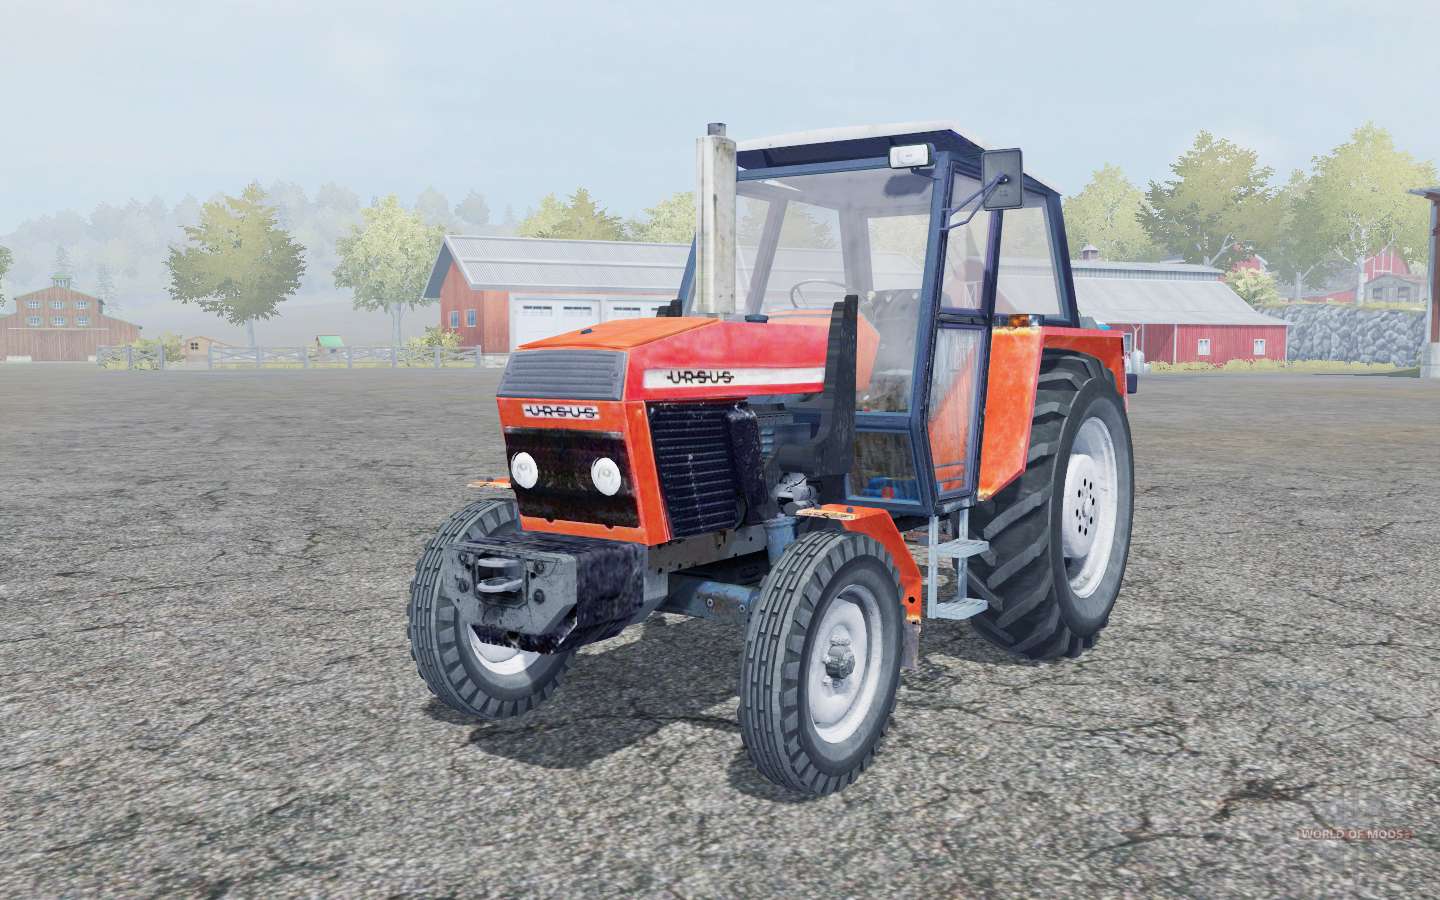 Ursus 912 portland orange for Farming Simulator 2013